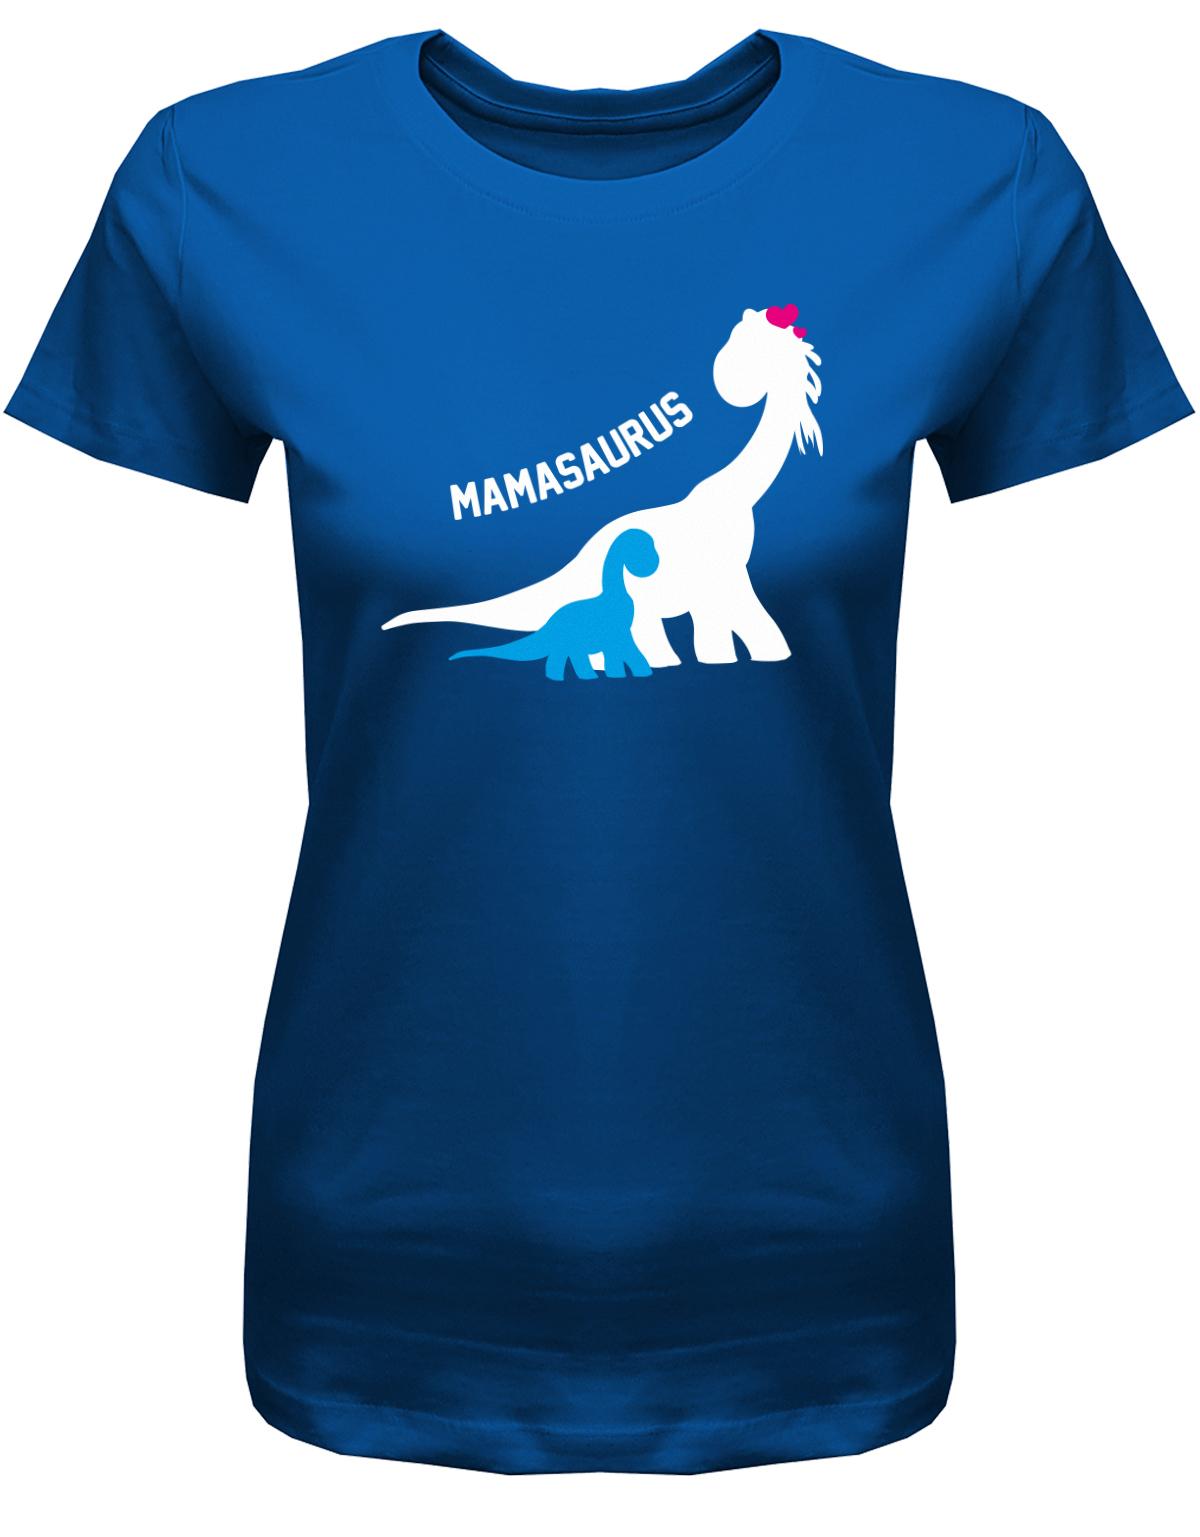 mamasaurus-mama-shirt-Royalblau